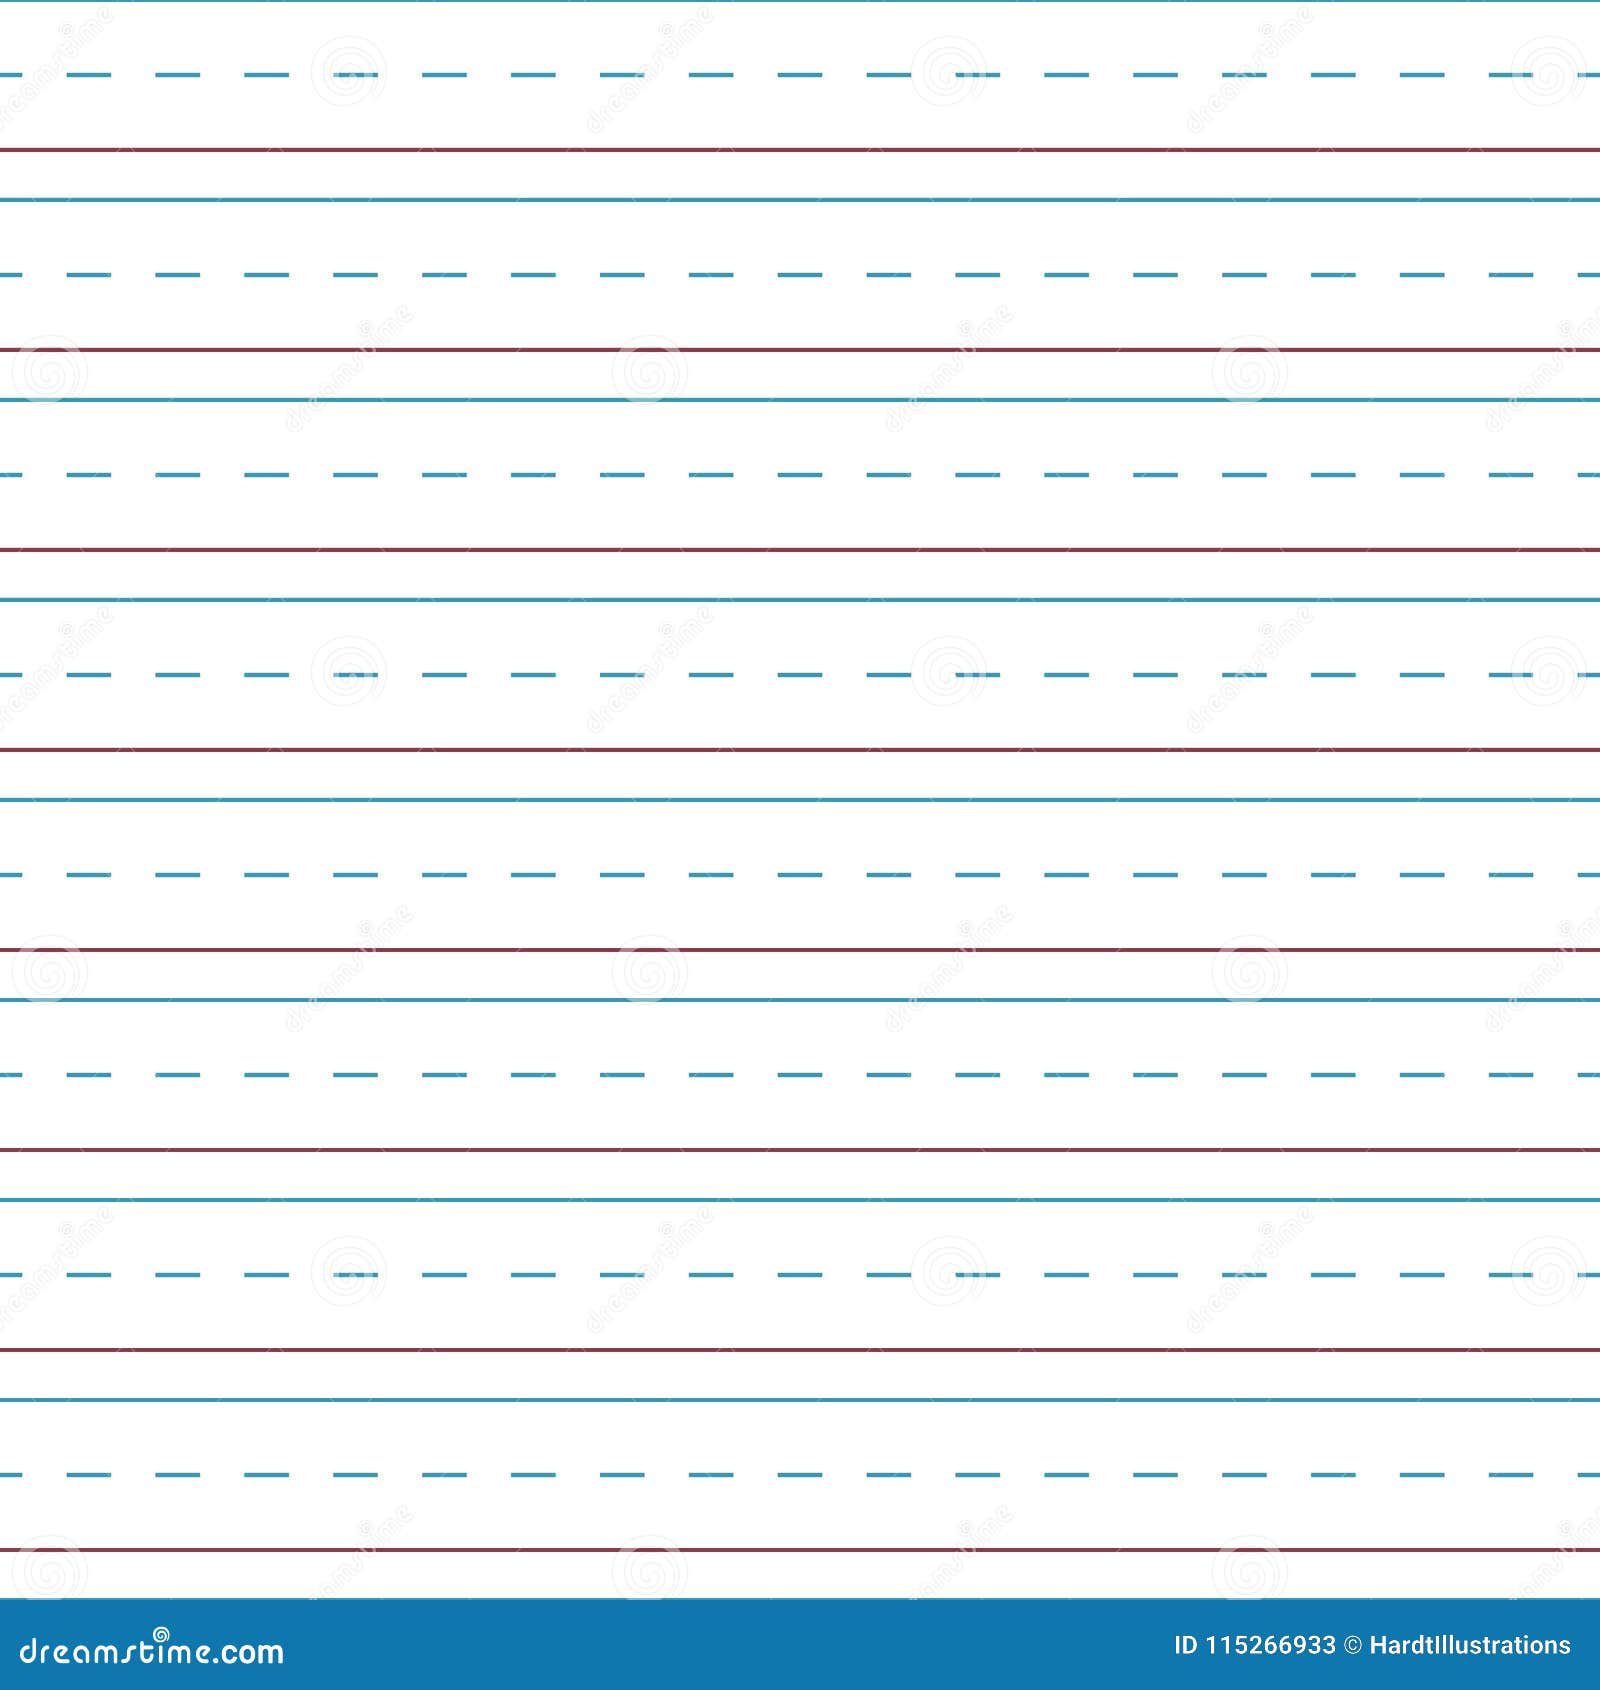 cursive handwriting tablet paper seamless pattern